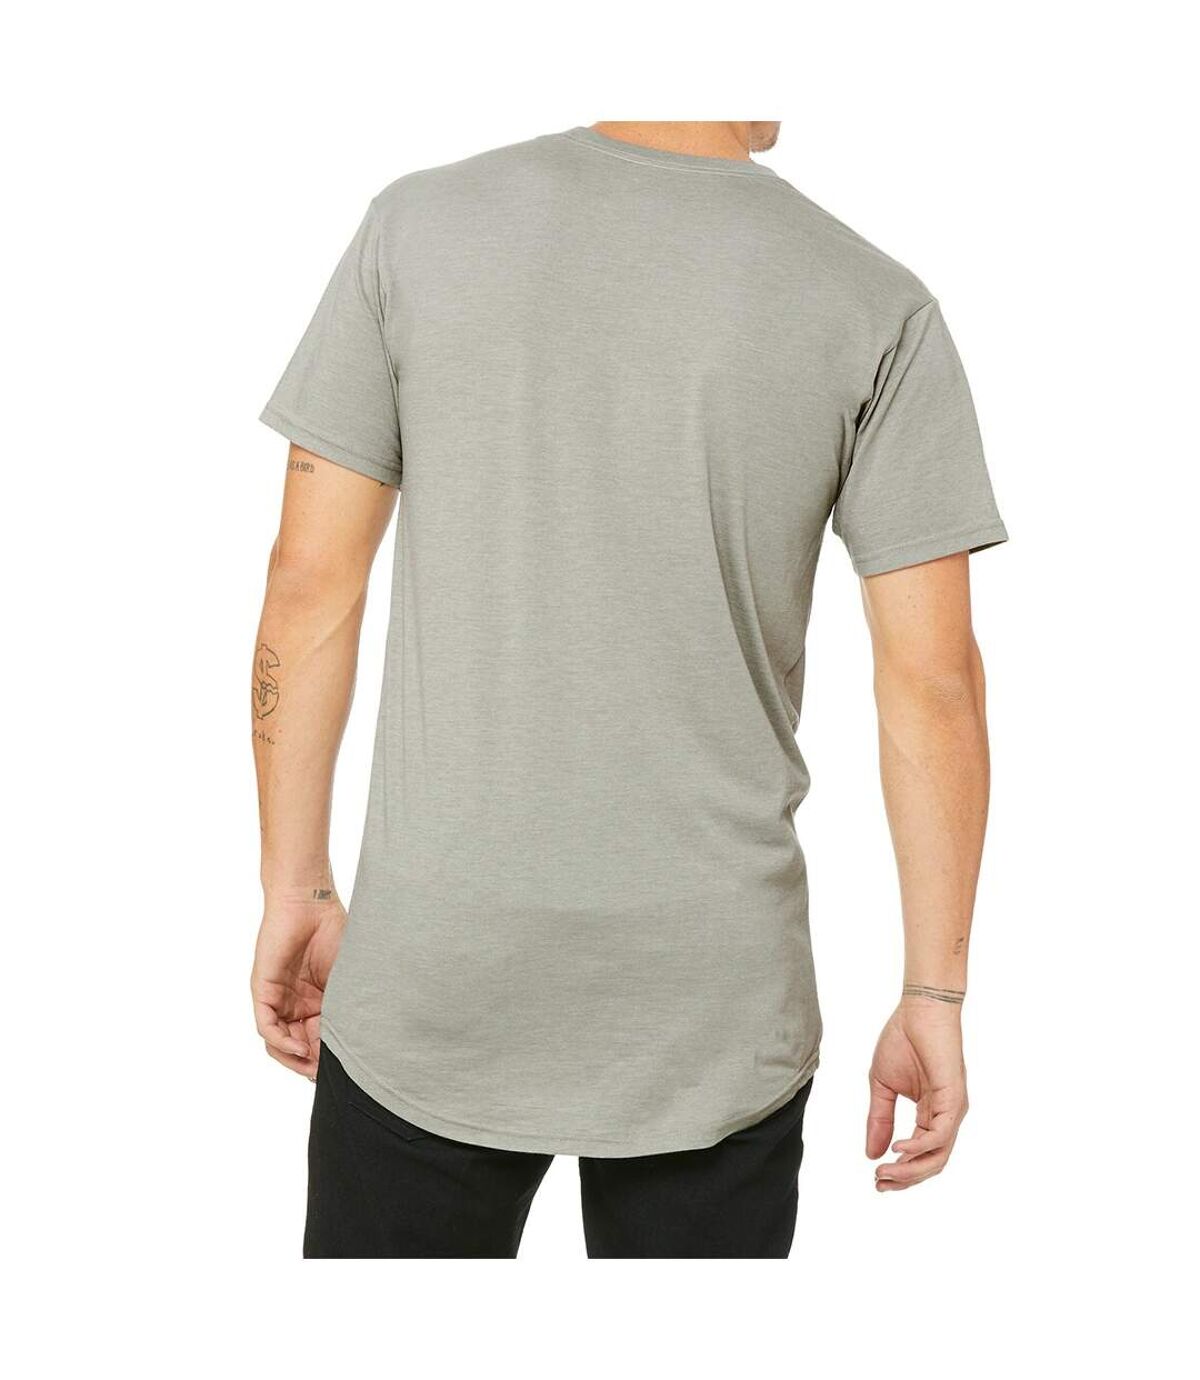 Bella + Canvas Urban - T-shirt long - Homme (Heather Stone) - UTRW4914